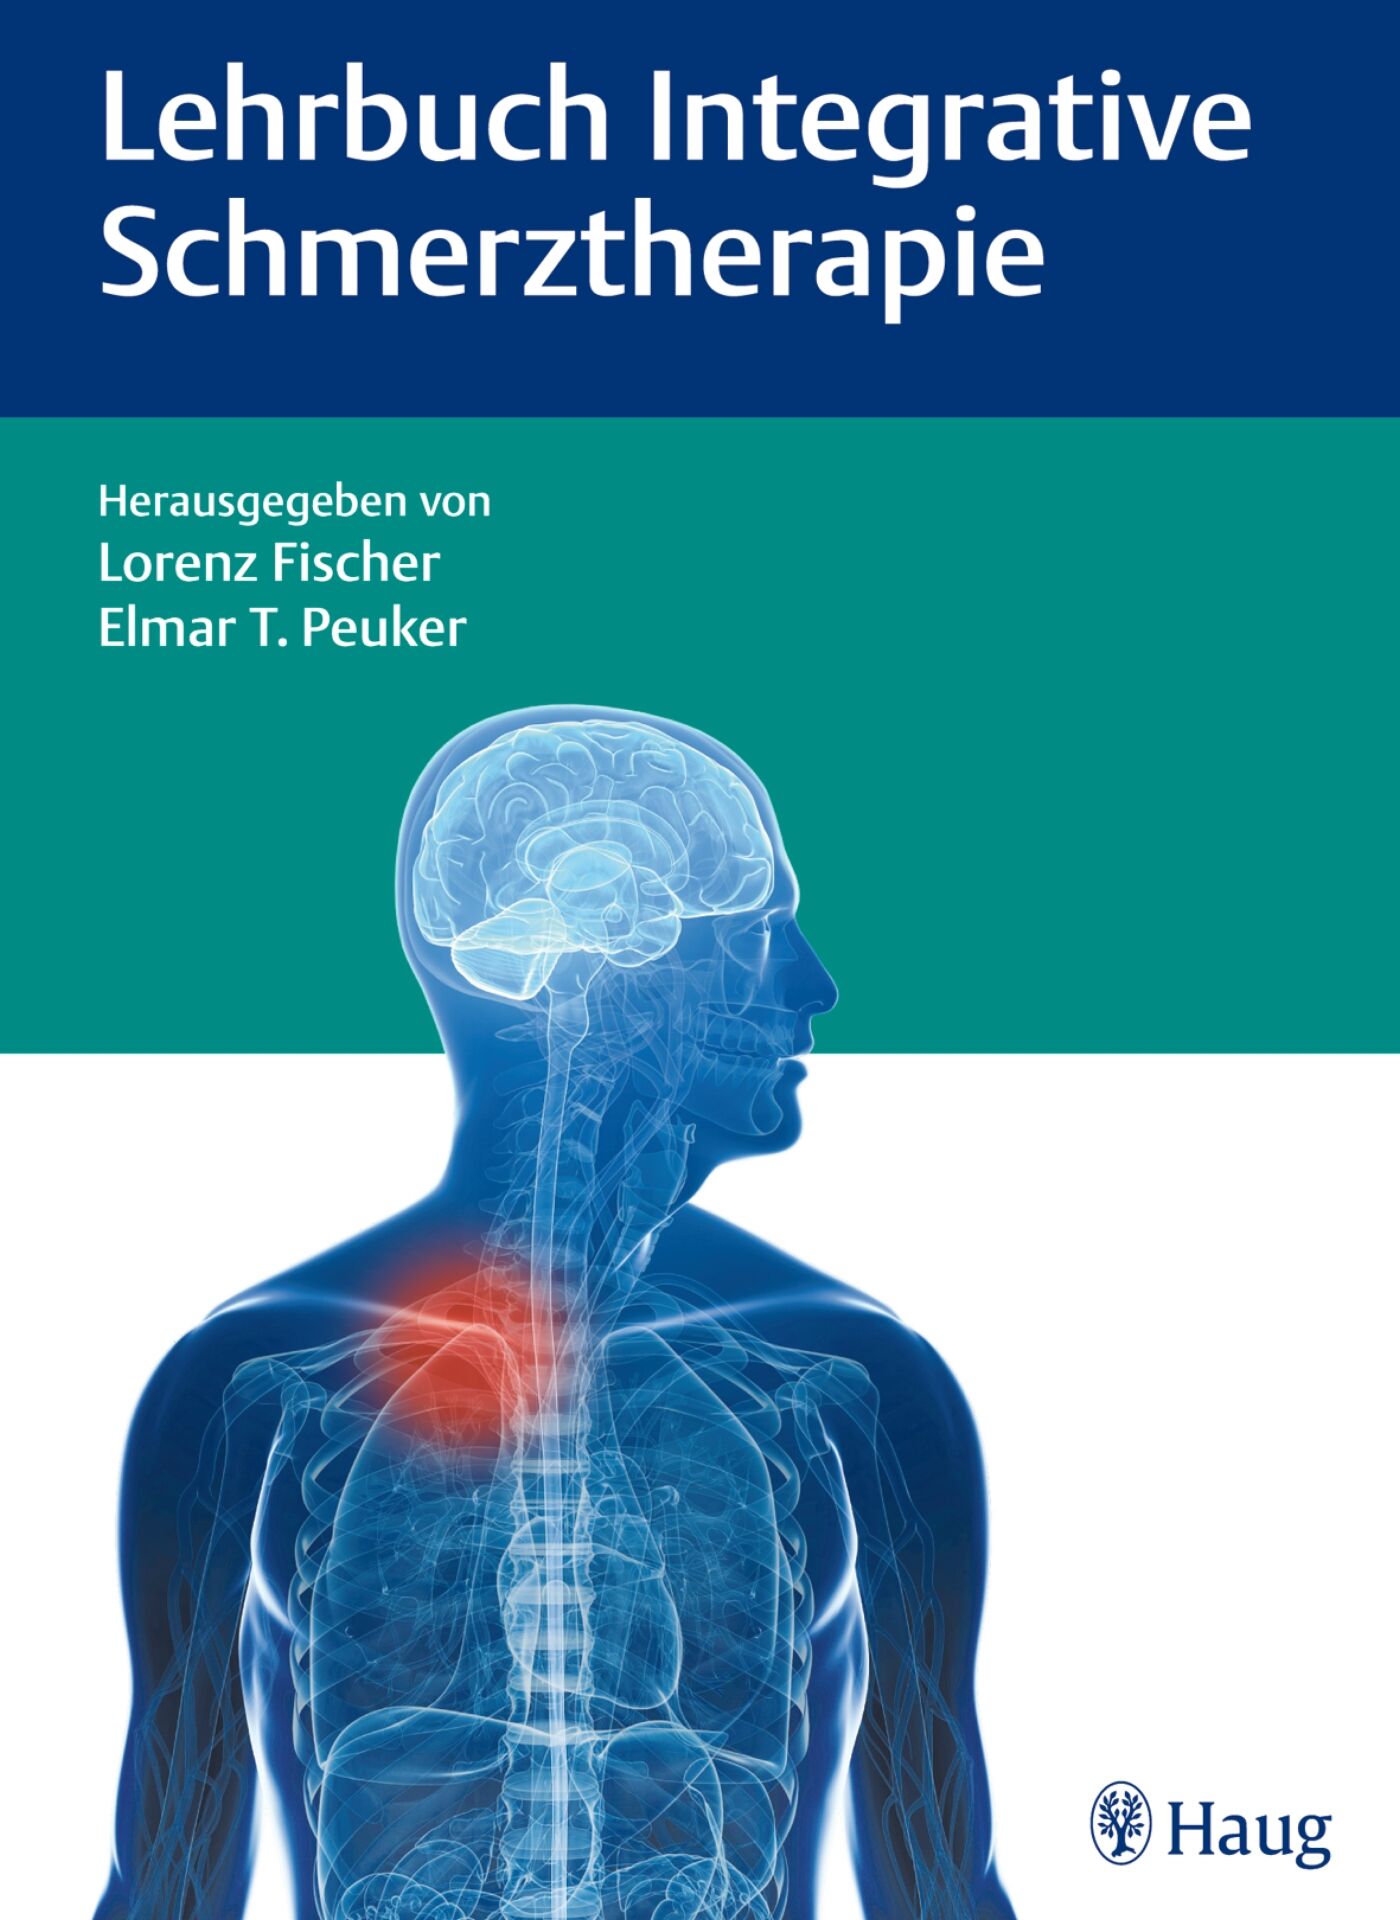 Lehrbuch Integrative Schmerztherapie, 9783830478065